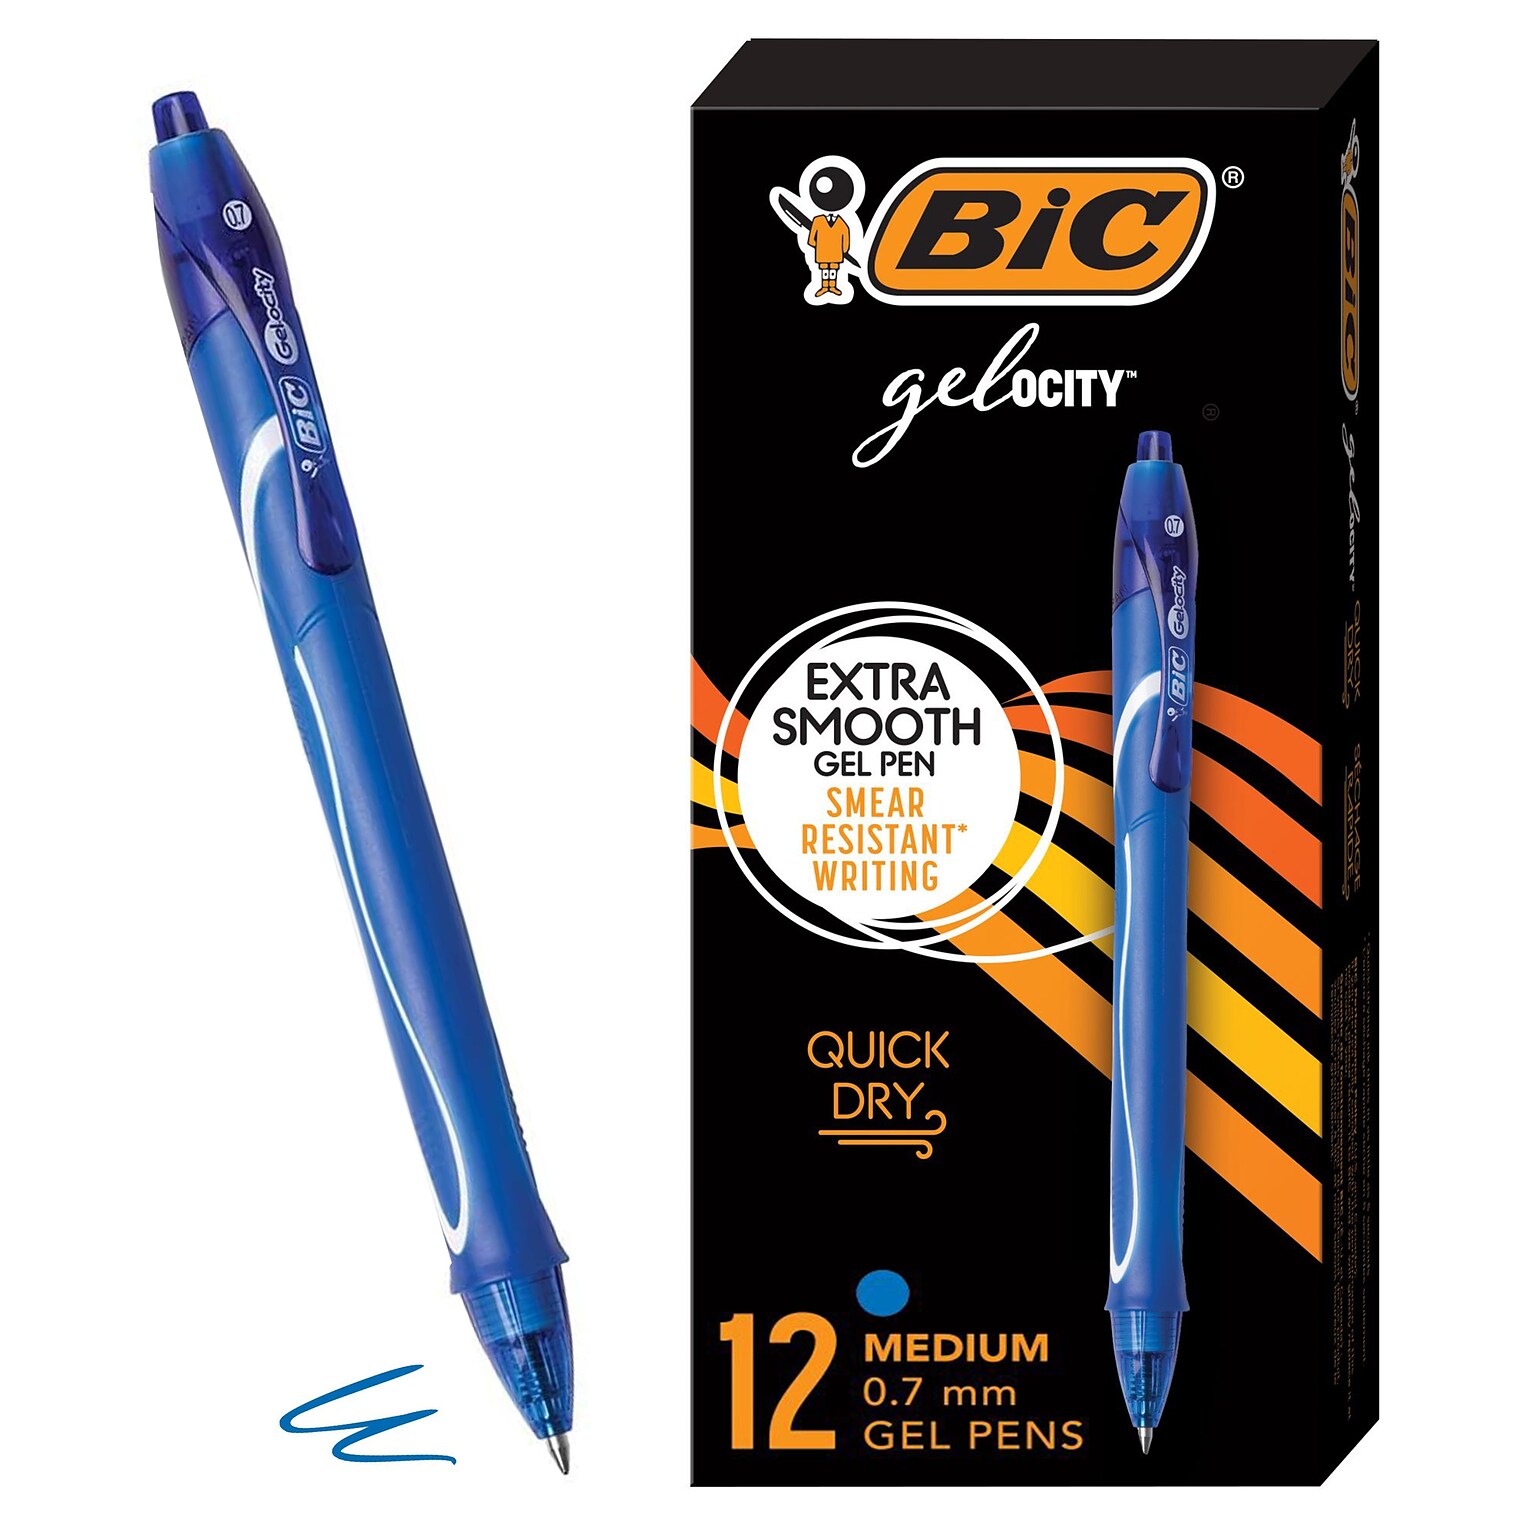 BIC Gel-ocity Quick Dry Retractable Gel Pen, Medium Point, 0.7 mm, Blue Ink, 12/Pack (RGLCG11-BLU)